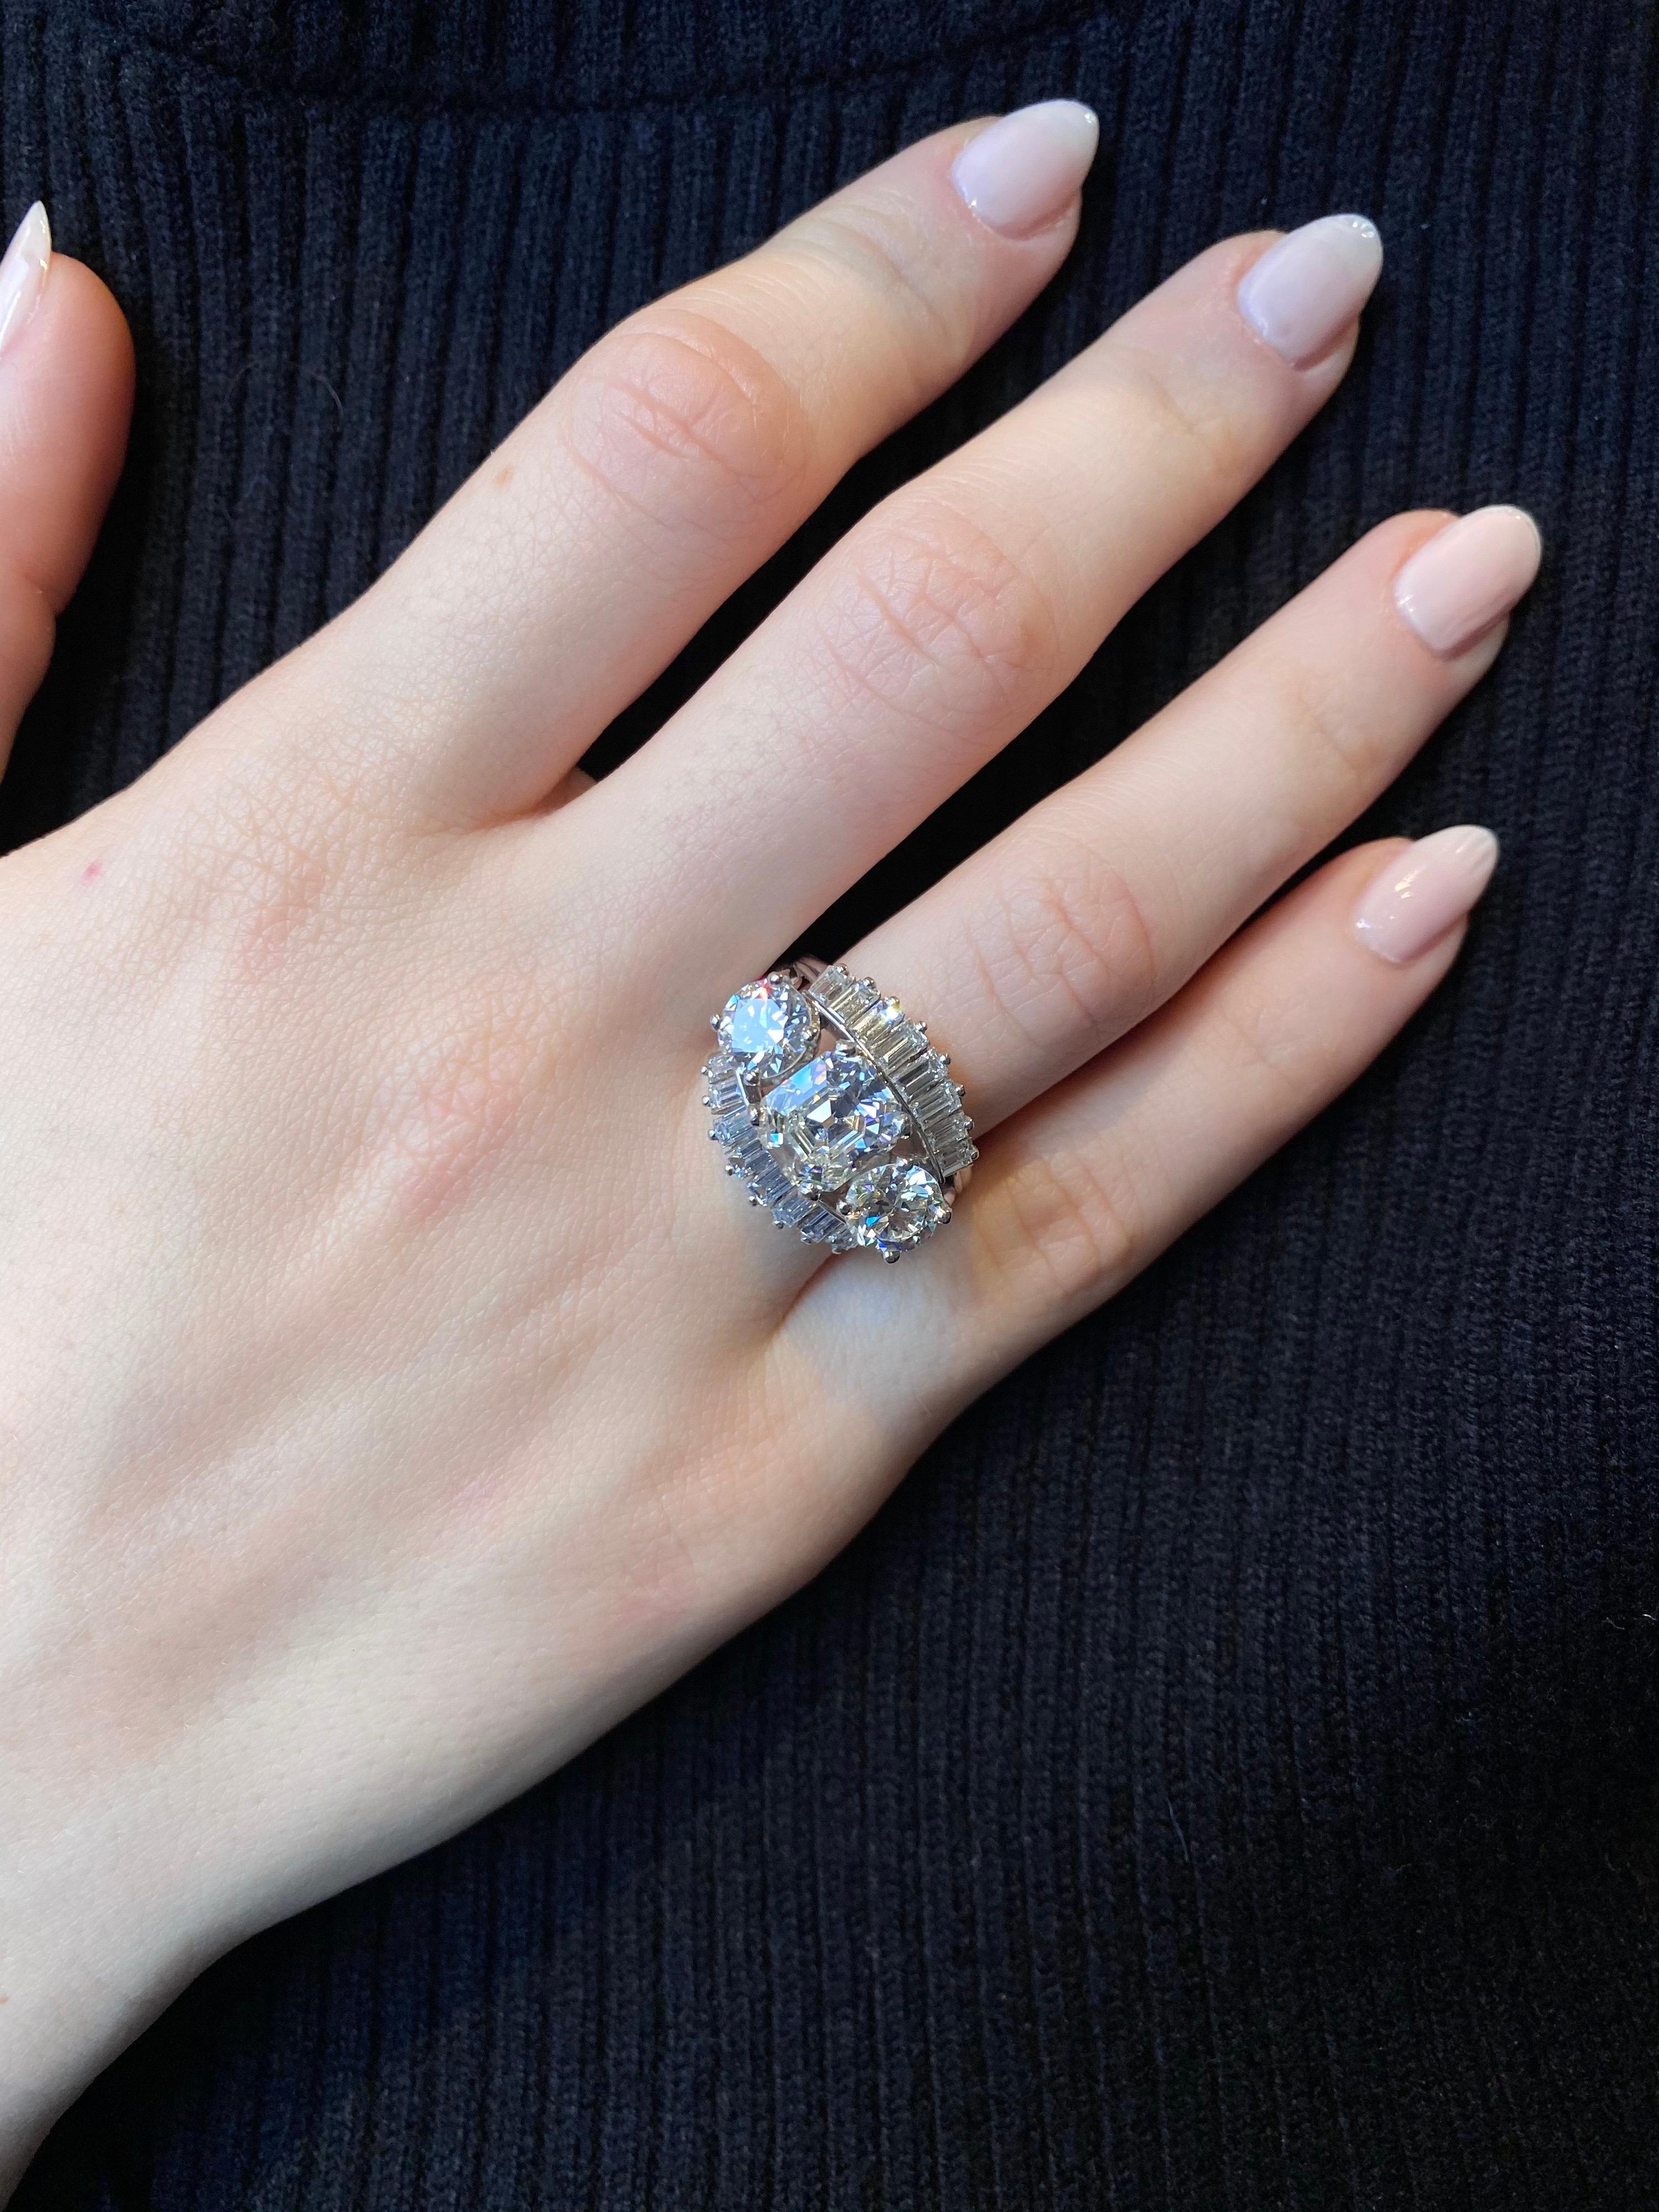 7 carat diamond ring on finger